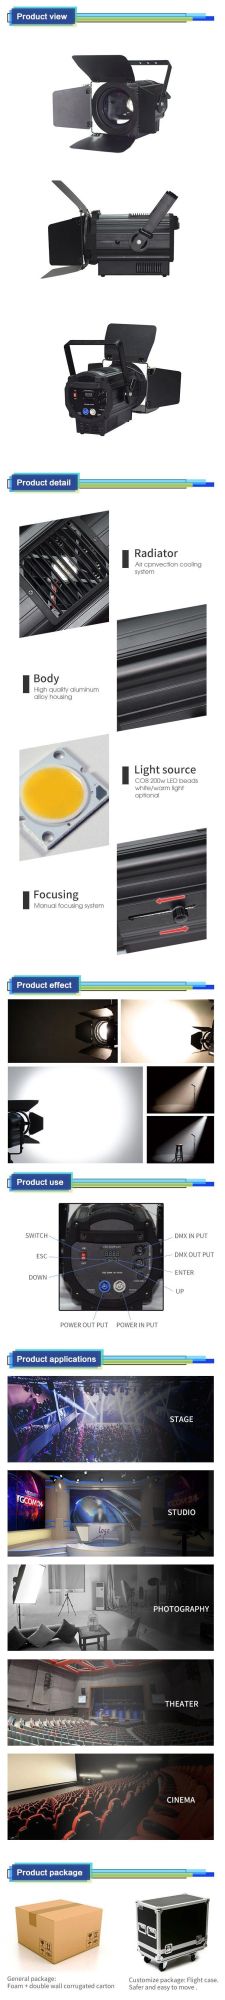 Yuelight LED 200W Video Fresnel Light with Zoom for Peformances Studio